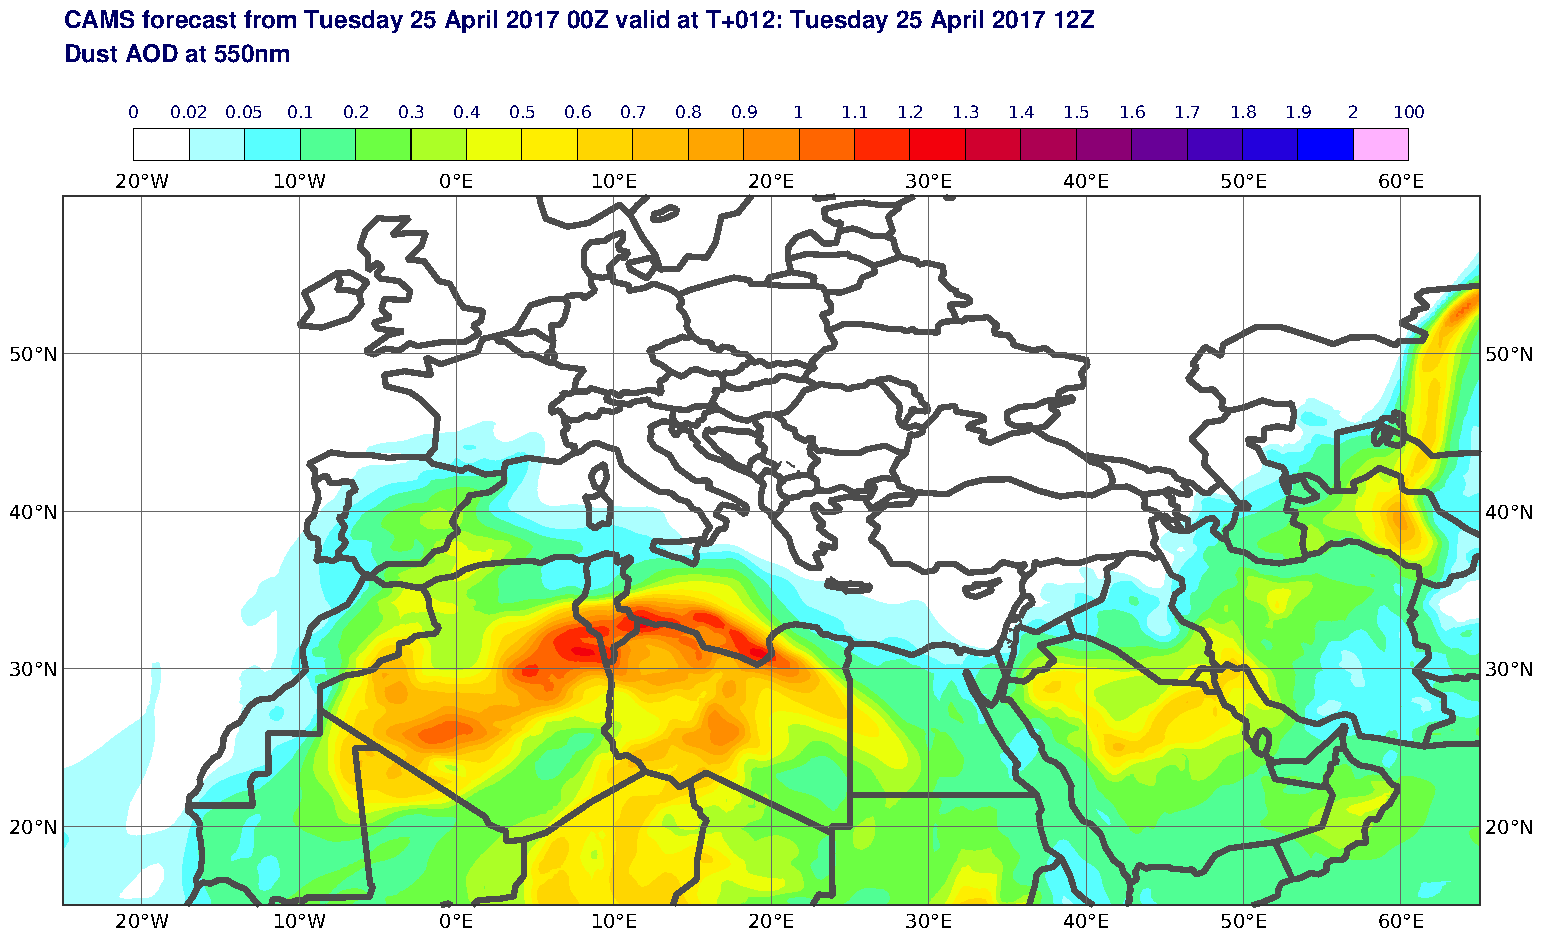 Dust AOD at 550nm valid at T12 - 2017-04-25 12:00